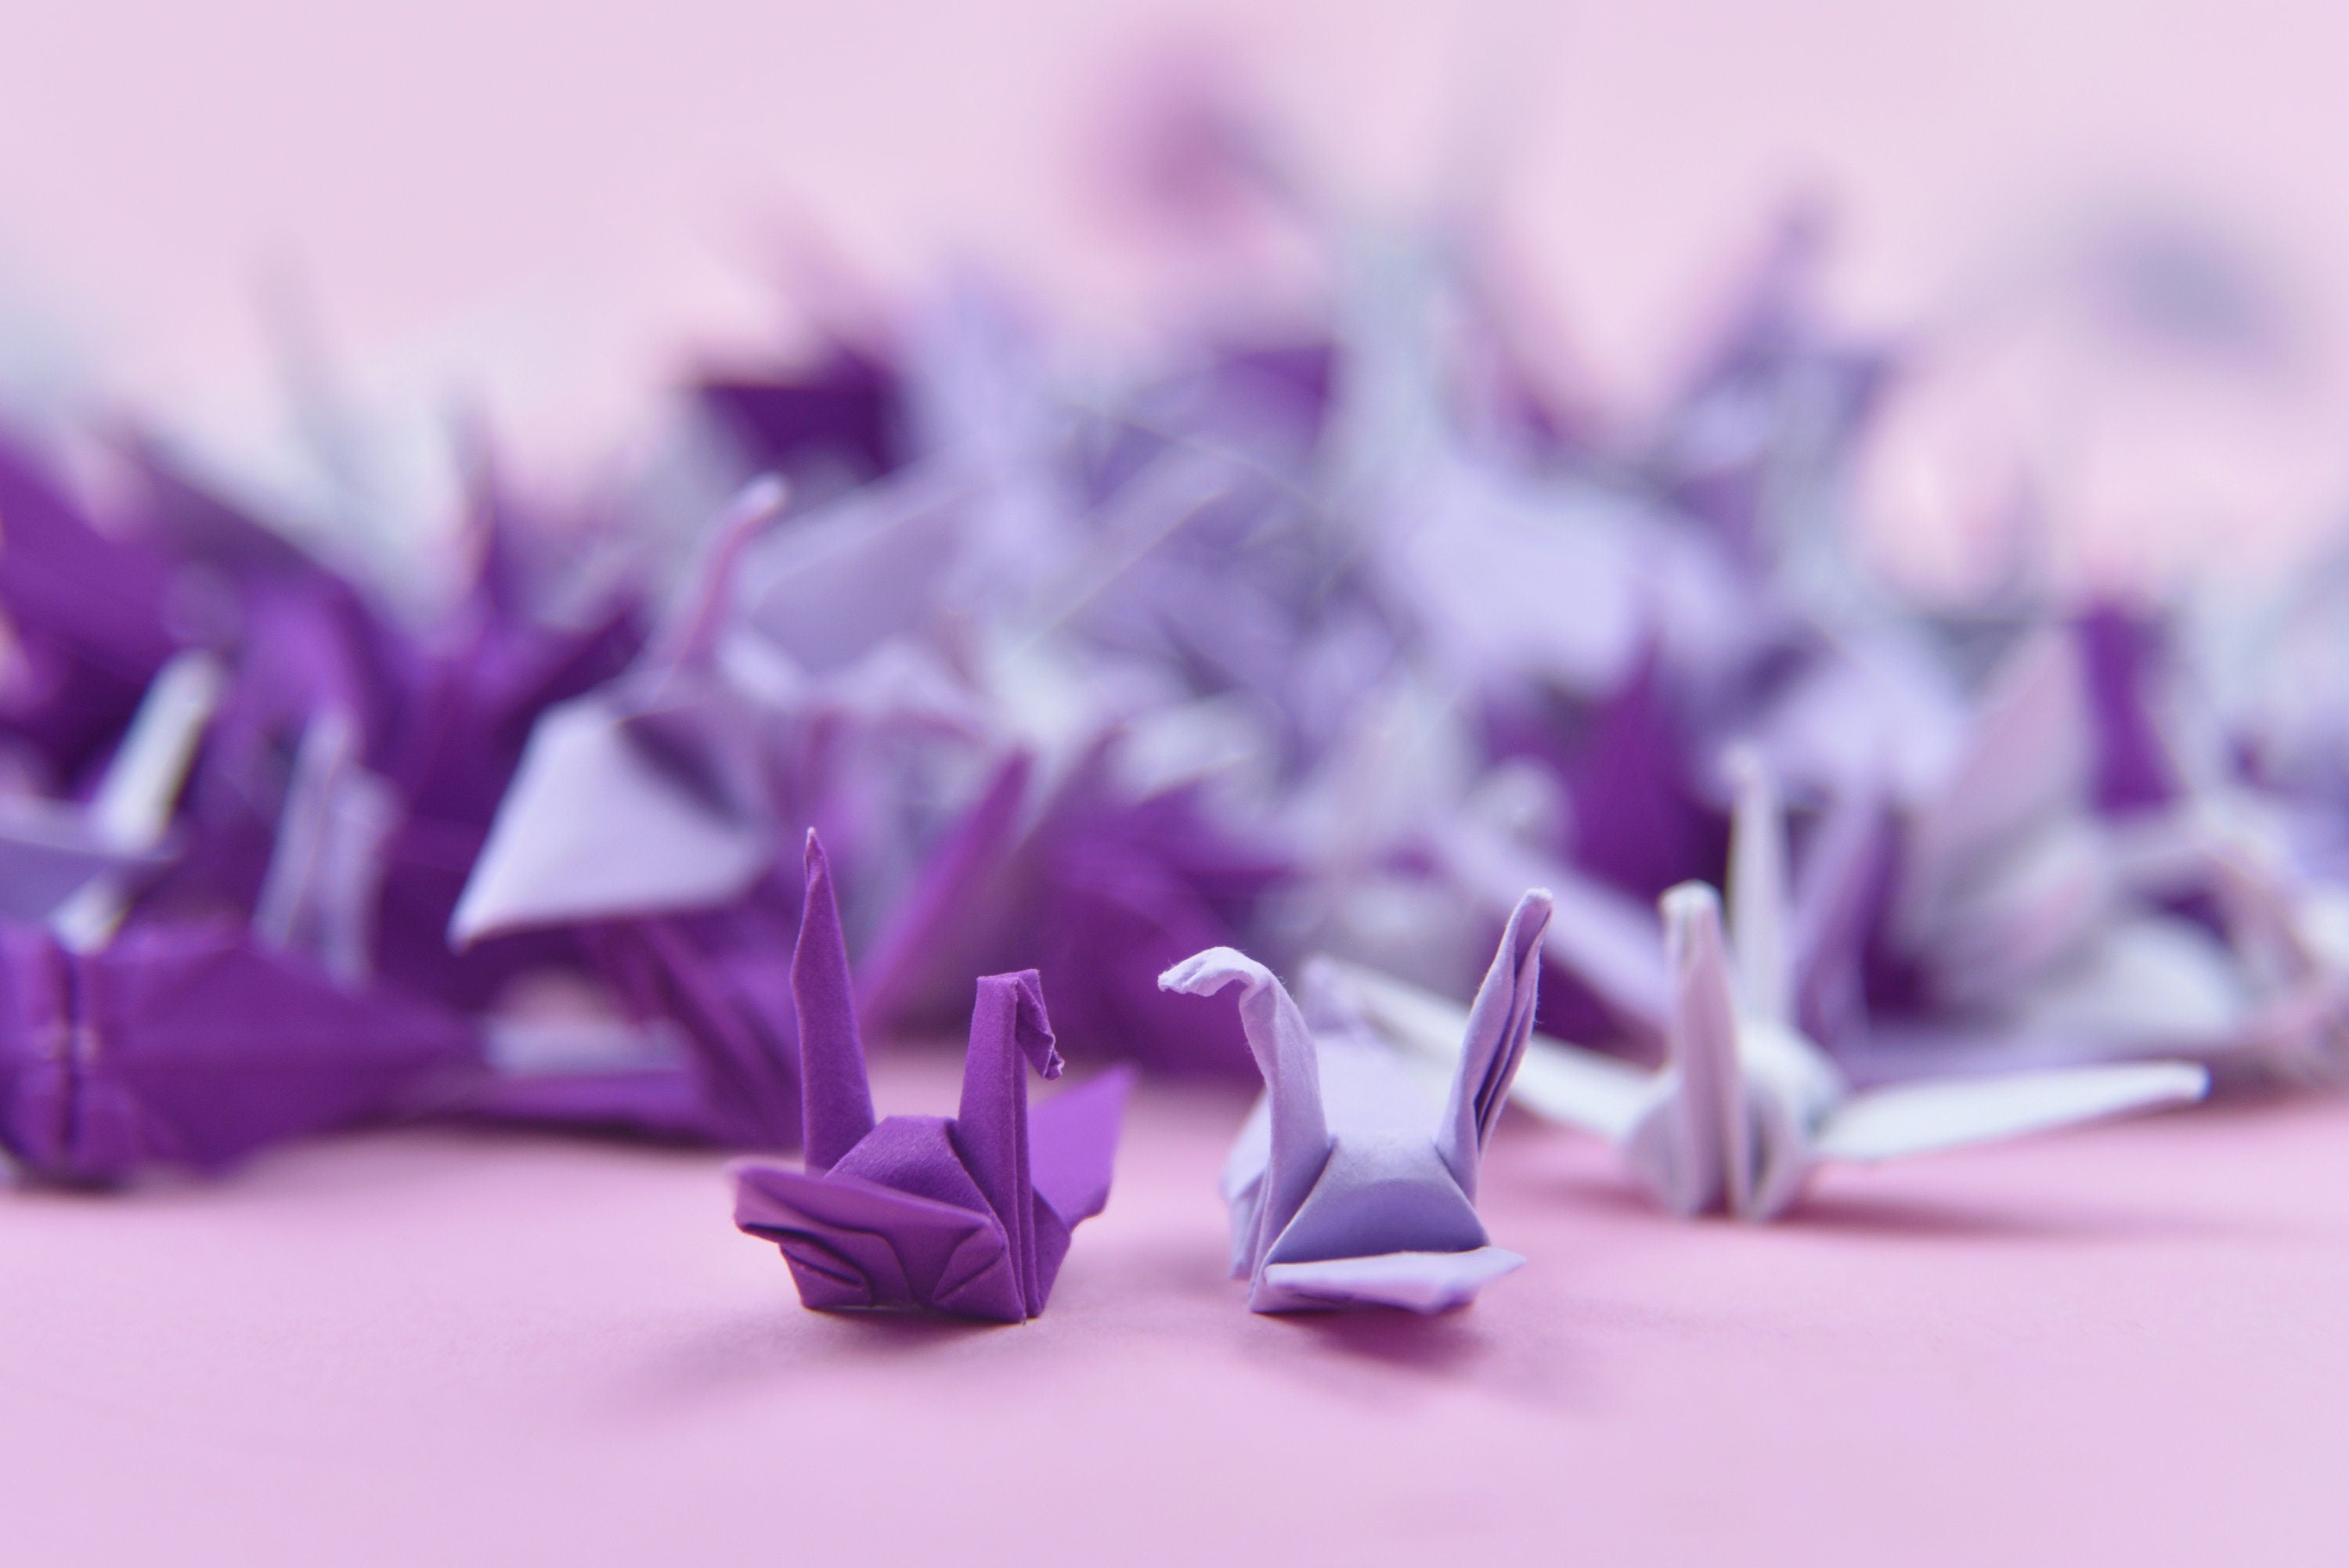 100 gru di carta origami tonalità viola - gru origami - prefabbricate - piccole 1,5x1,5 pollici per decorazioni di nozze, regali di anniversario, San Valentino